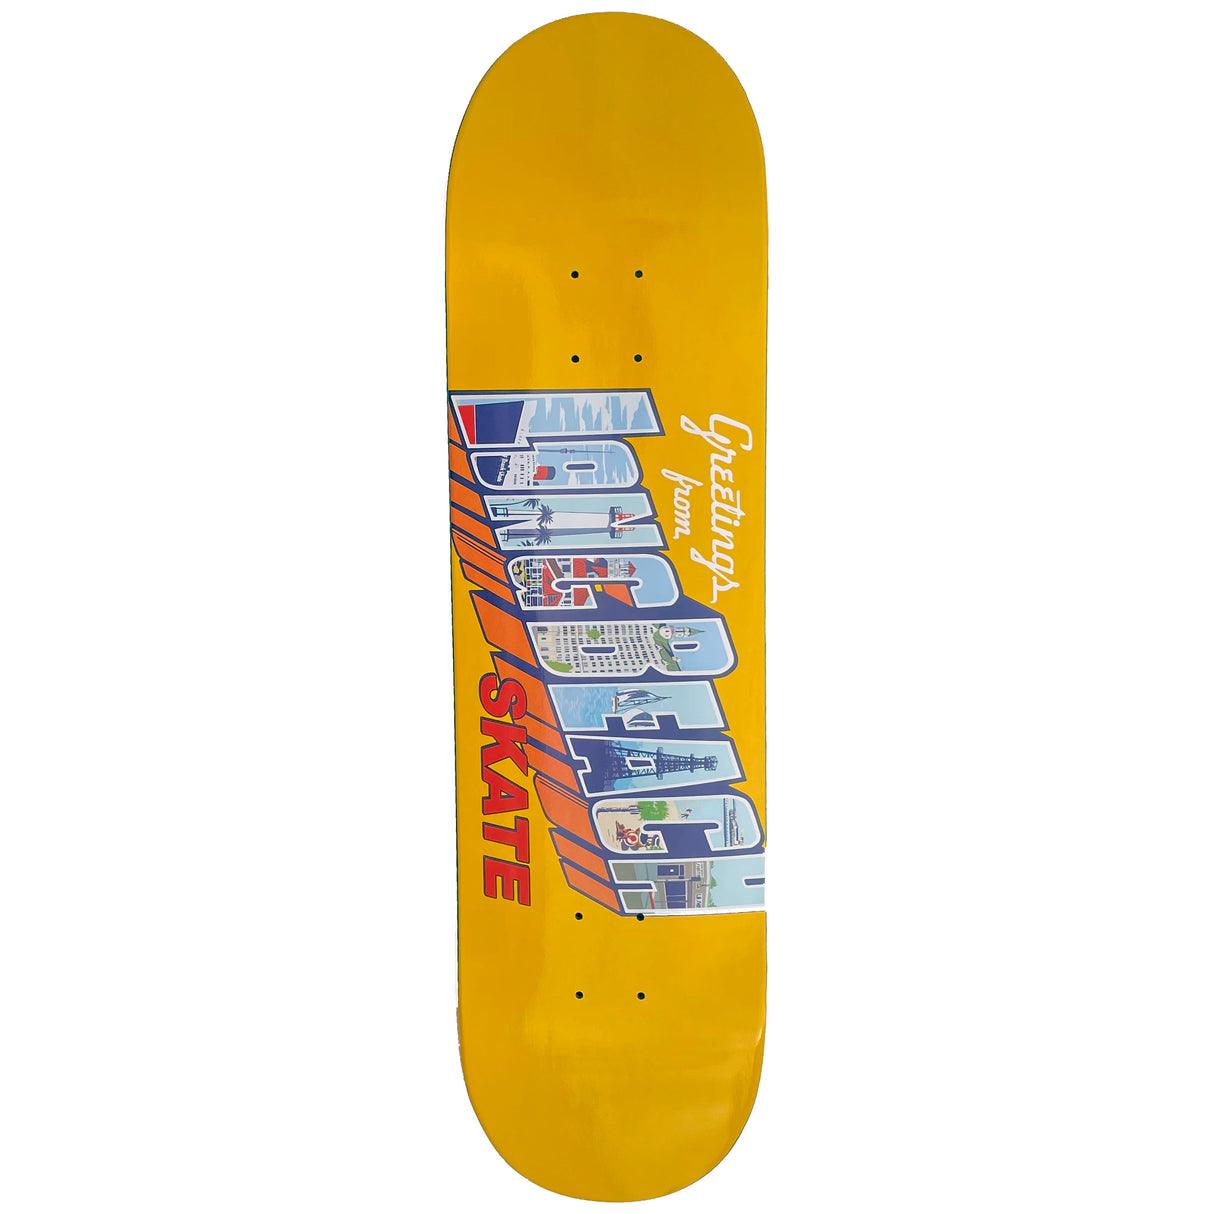 Long Beach Skate Co. Greetings Yellow Skateboard Deck